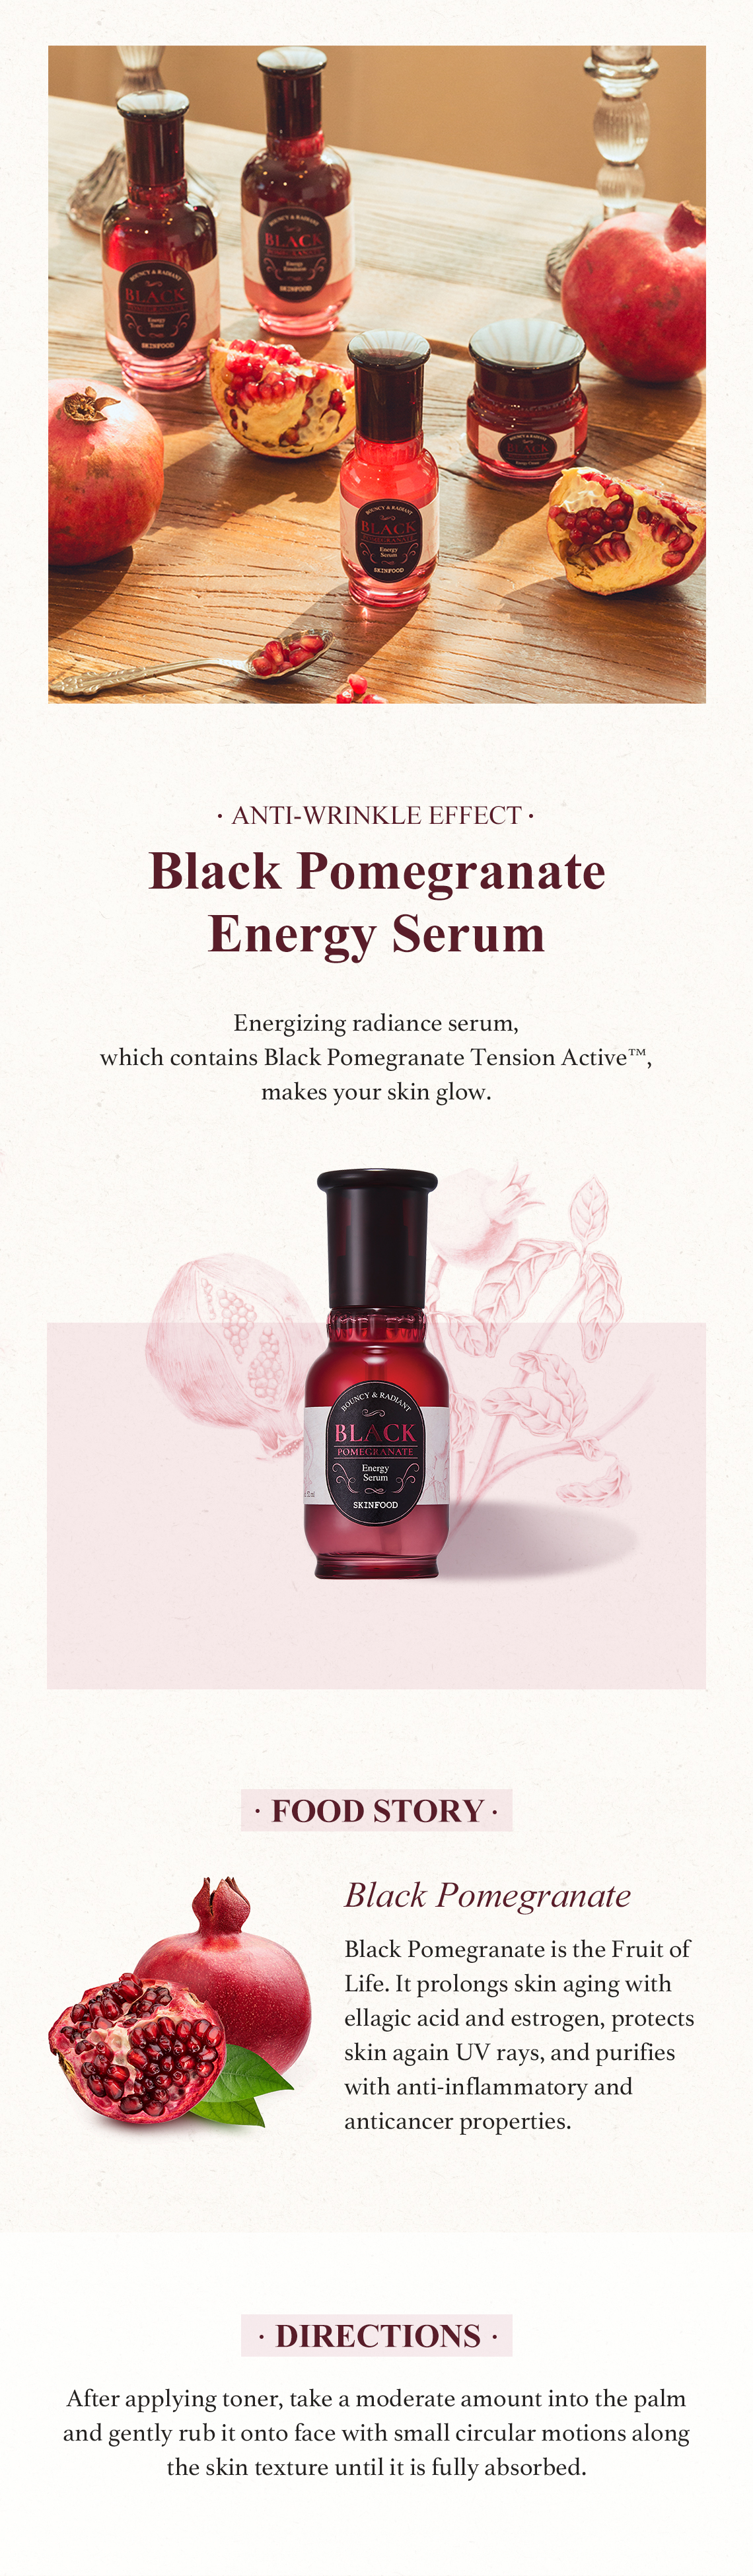 Black Pomegranate Energy Serum